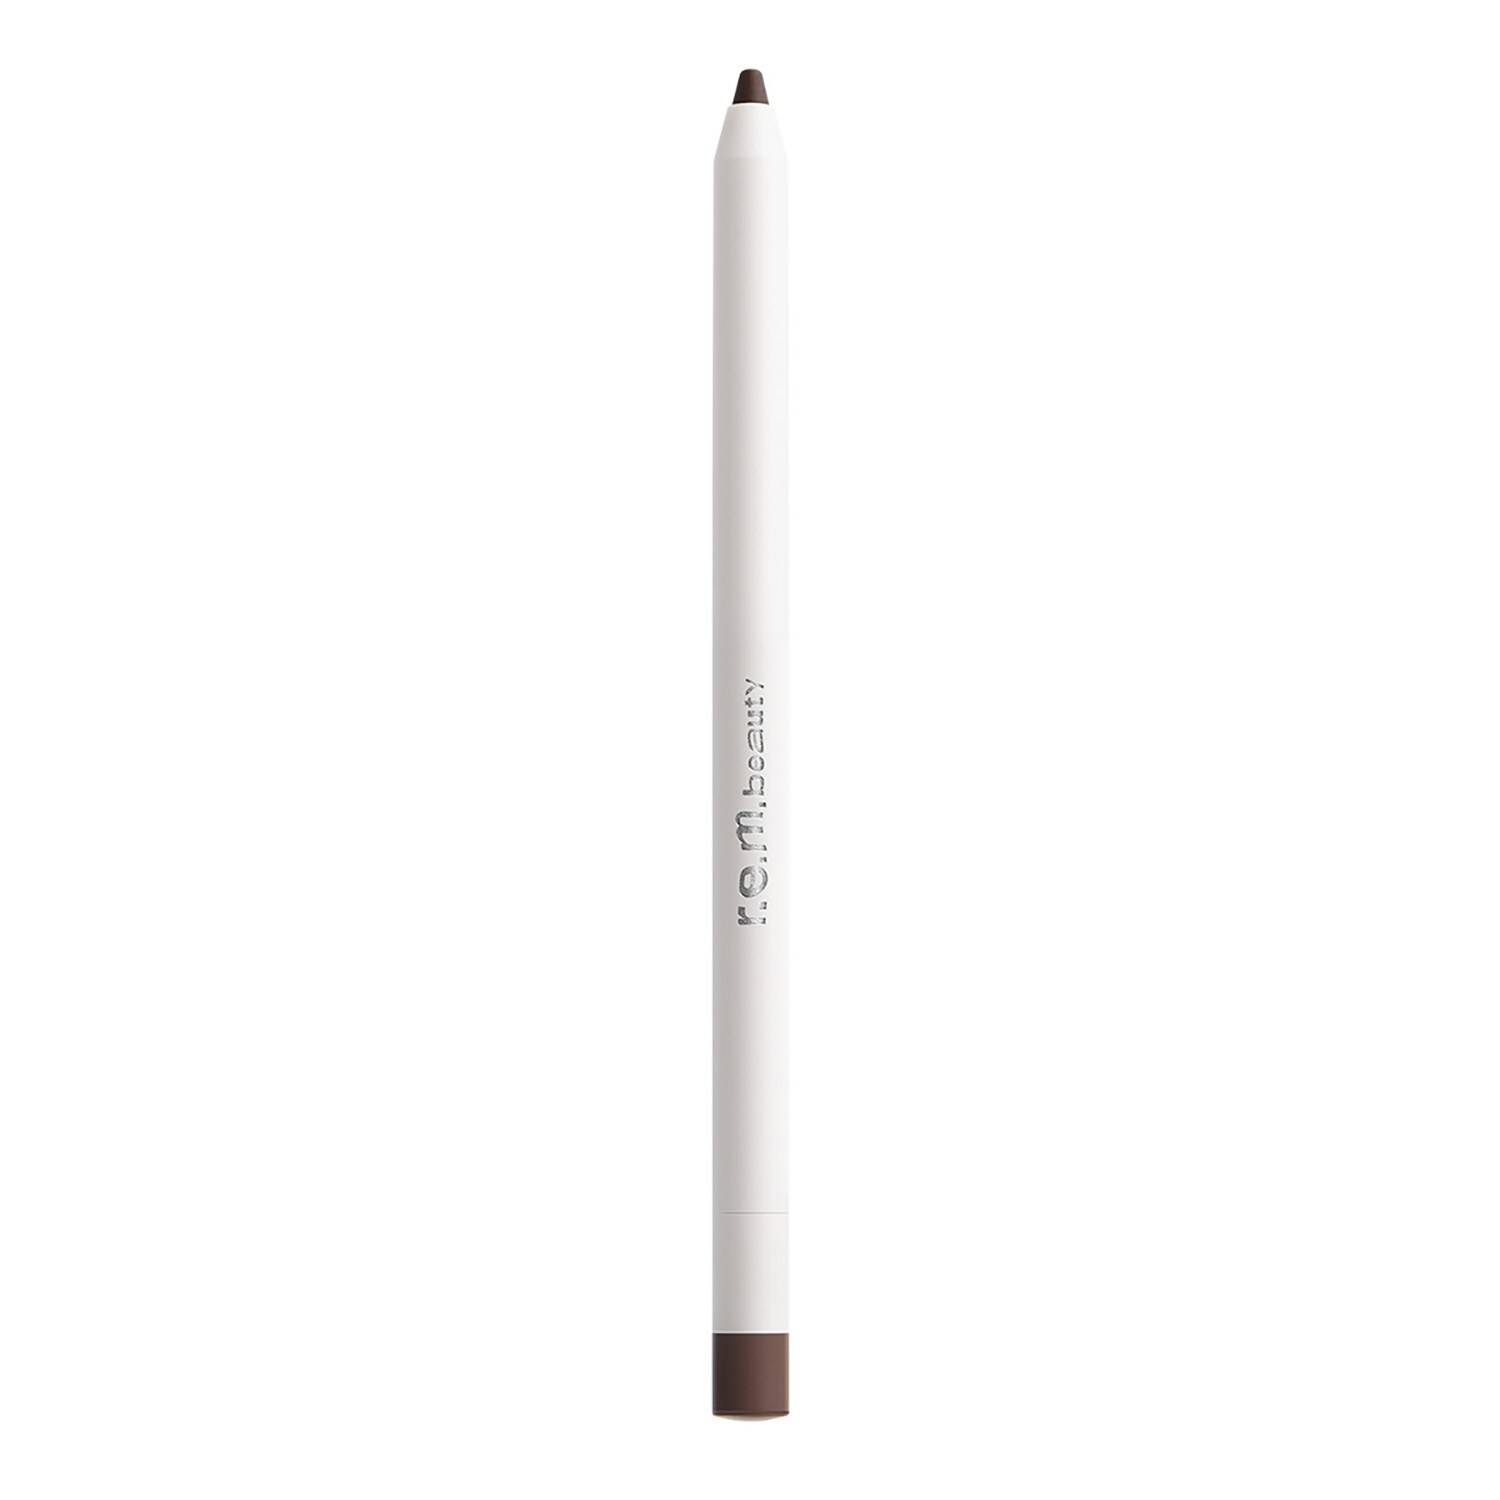 Rem Beauty At The Borderline Kohl Eyeliner Pencil 0.5G Teddy Bear Rich Brown